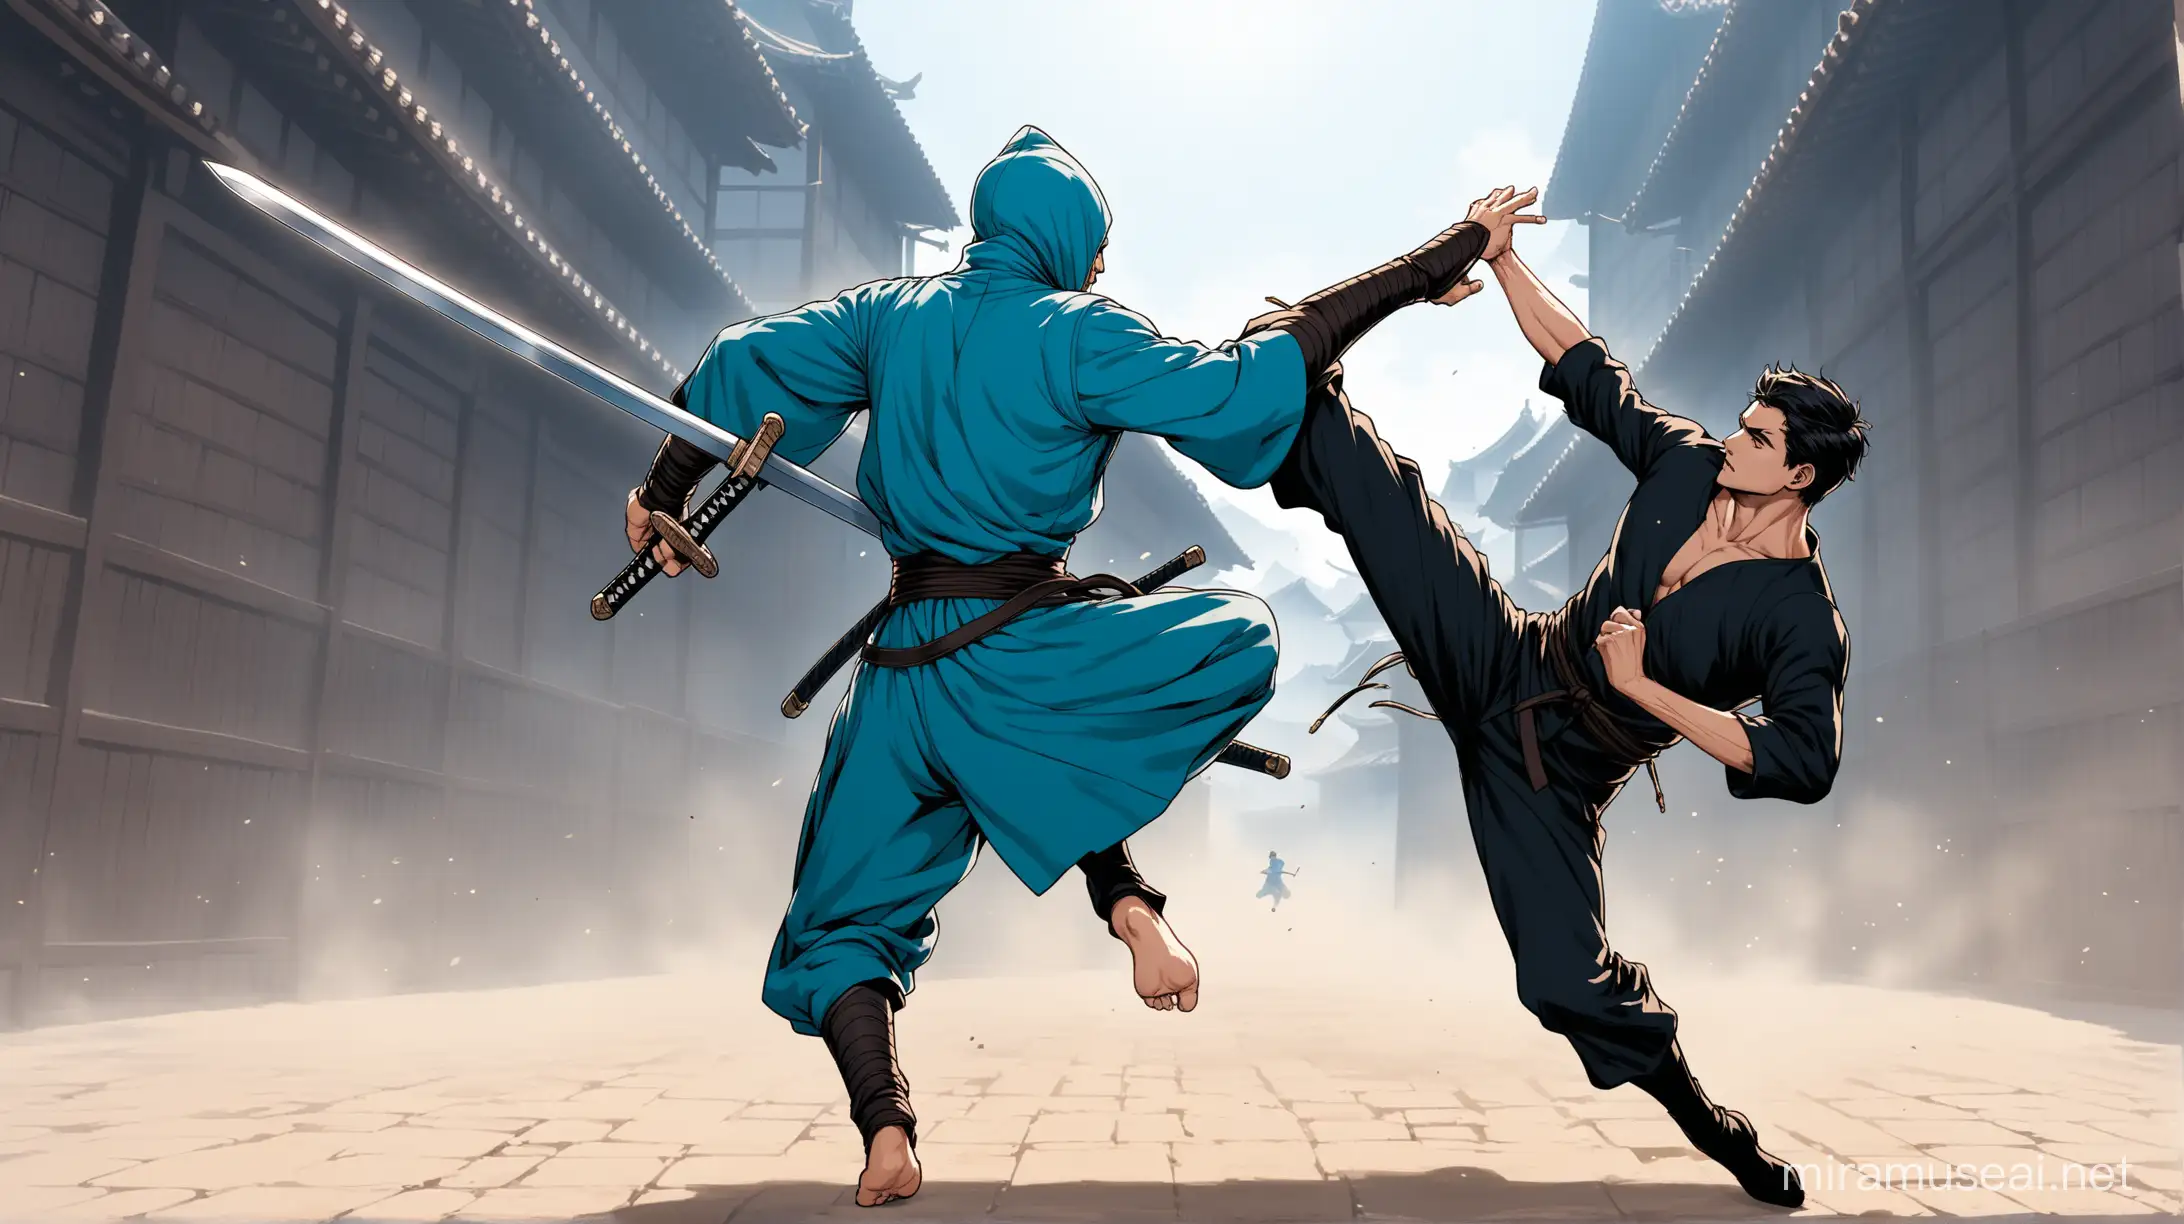 Blue Swordsman Performing Jumping Spin Kick on BlackClad Opponent